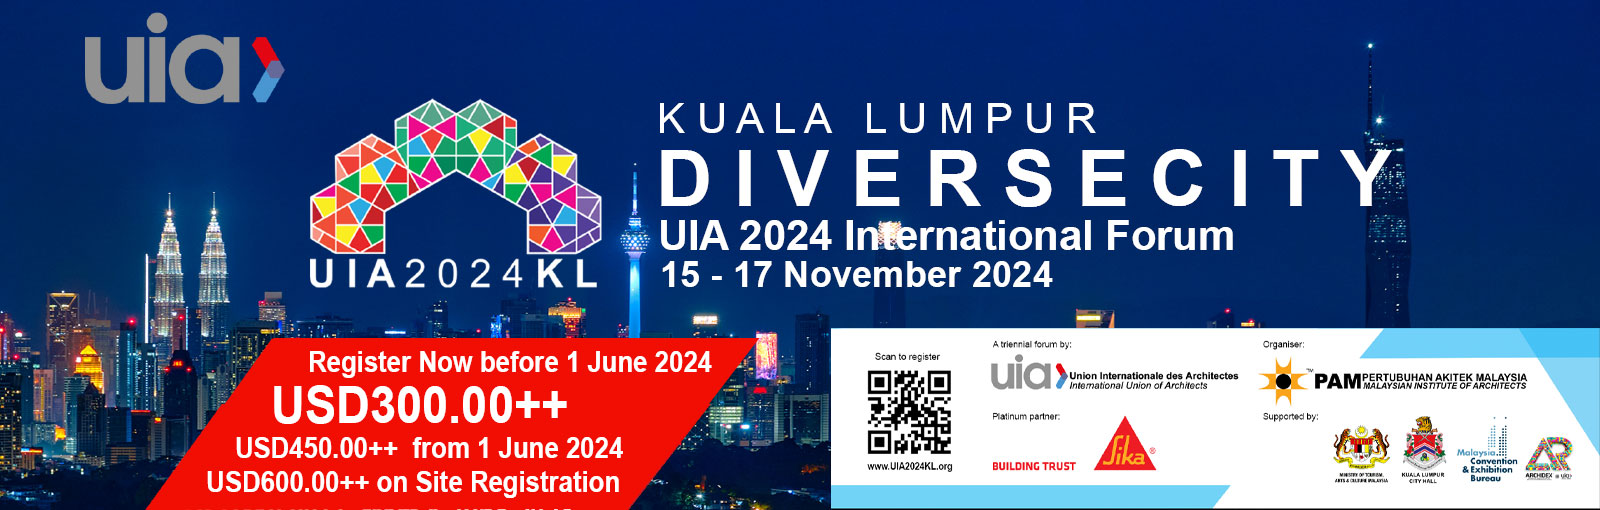 UIA 2024 International Forum in Kuala Lumpur (UIA2024KL)